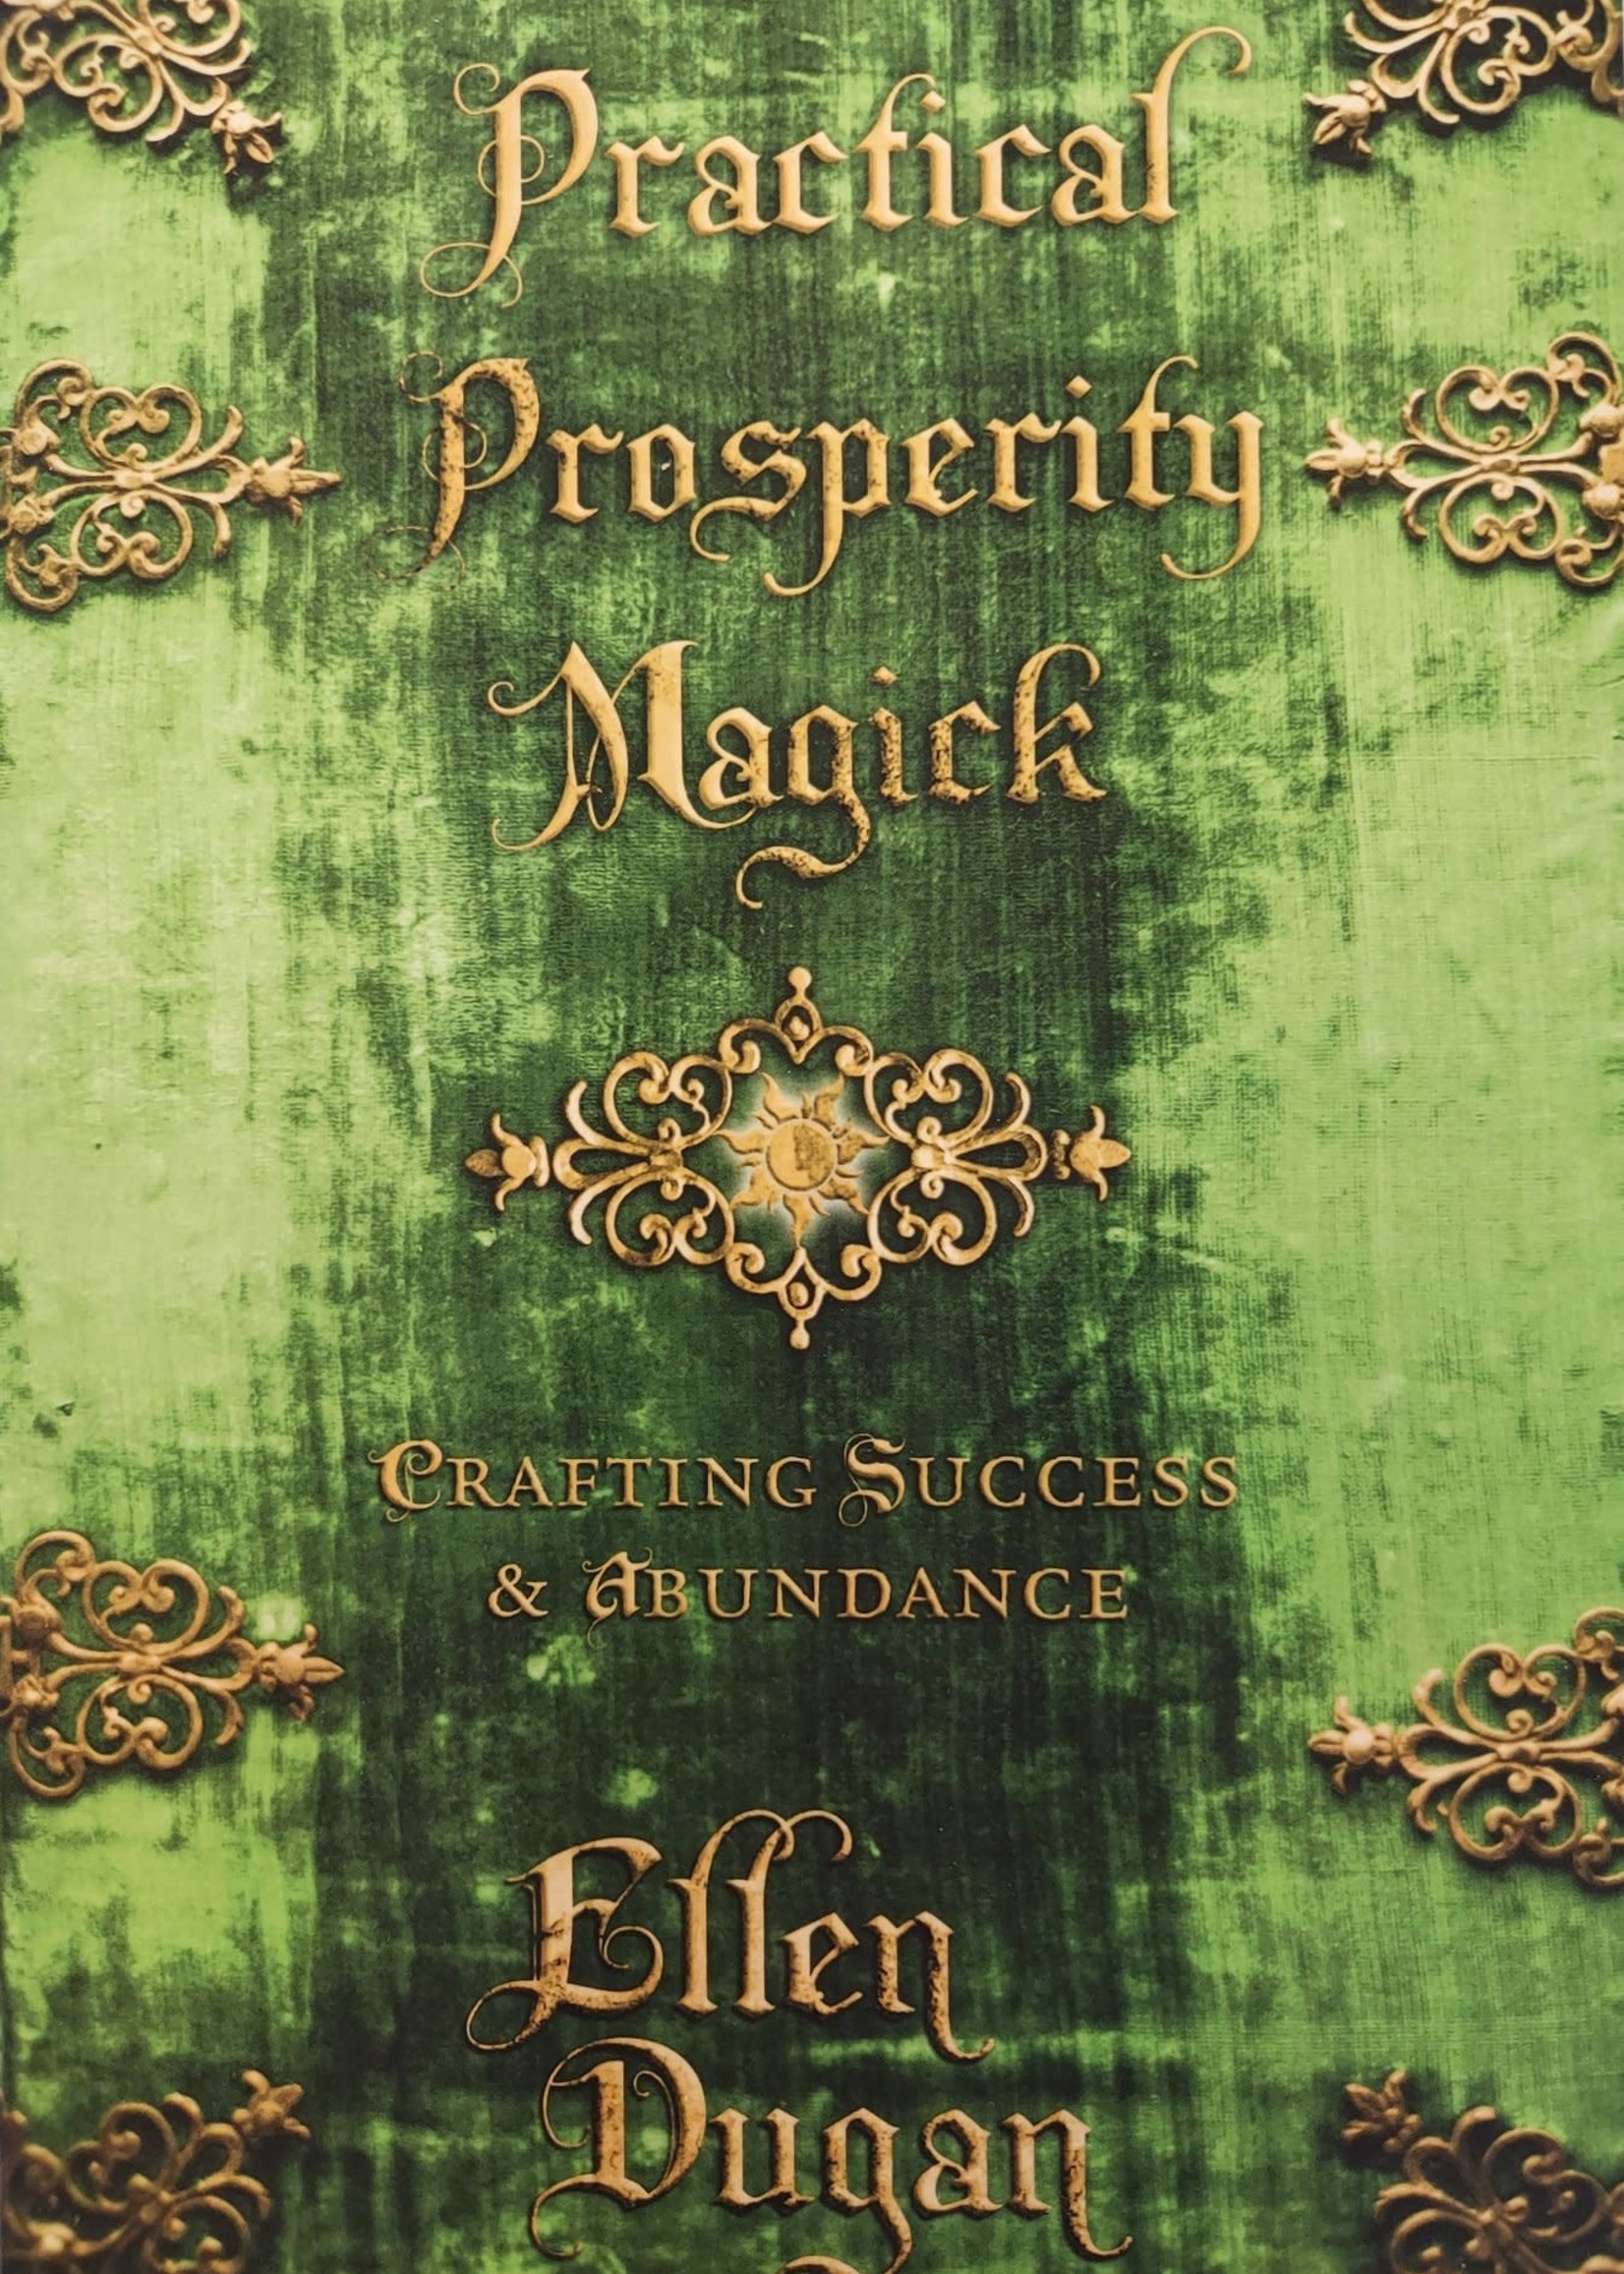 Practical Prosperity Magick - BY ELLEN DUGAN